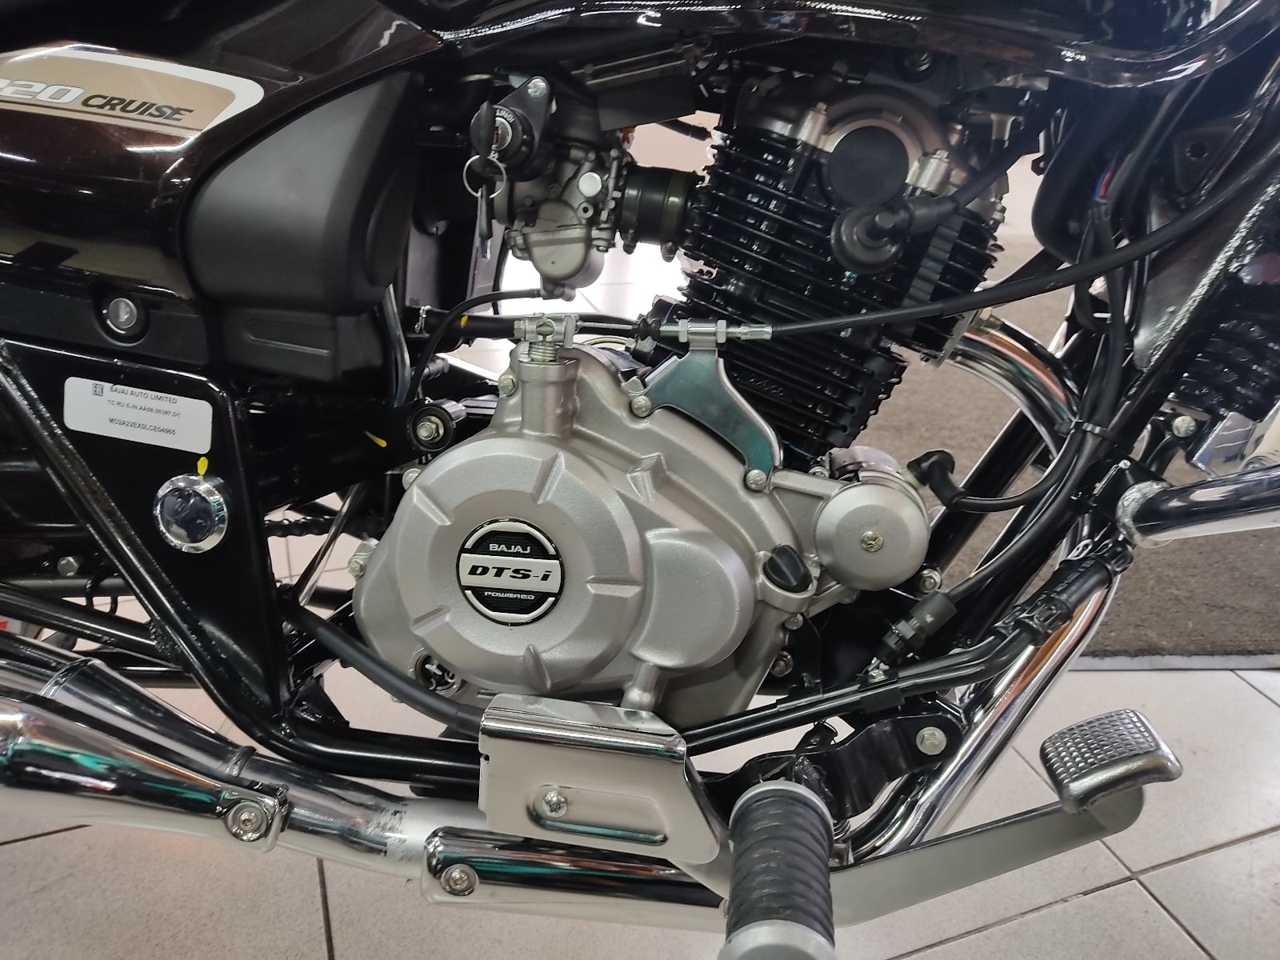 Обзор мотоцикла Avenger Cruise 220 DTS-i  двигатель DTS-I Twin Spark